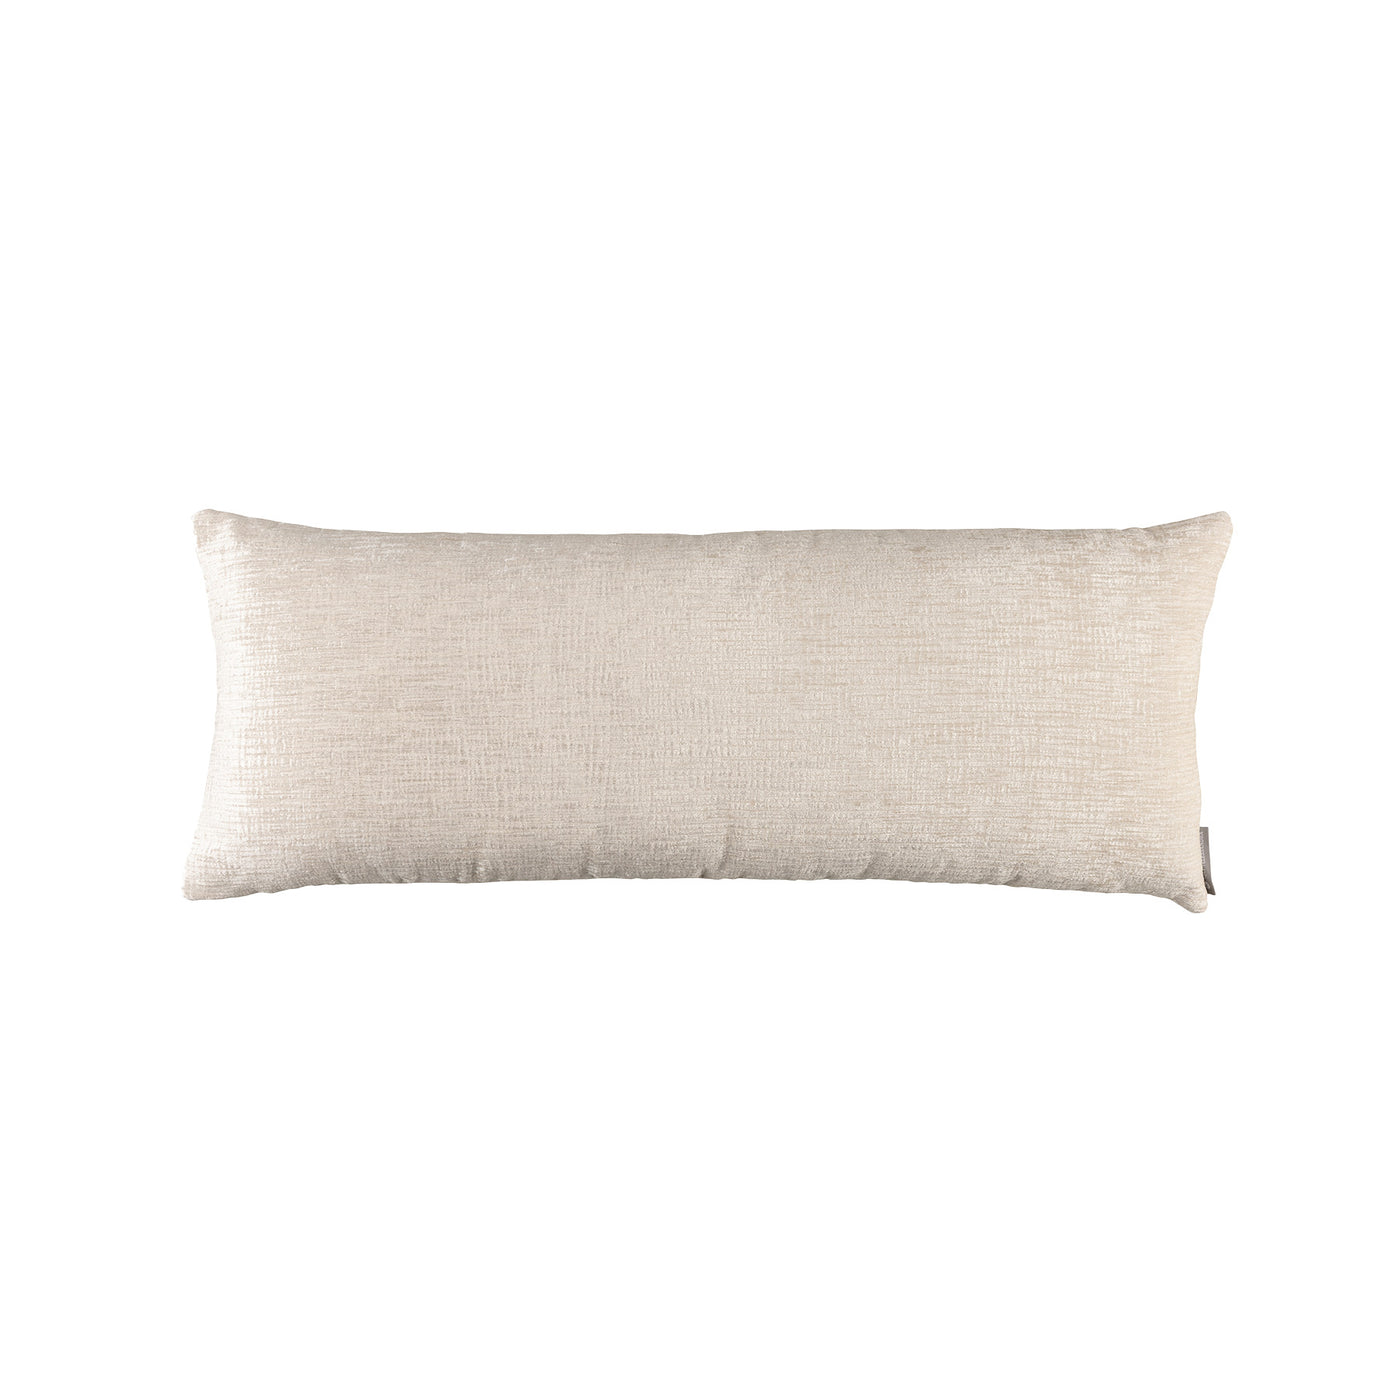 Ava Ivory Long Rectangle Pillow (18x46)